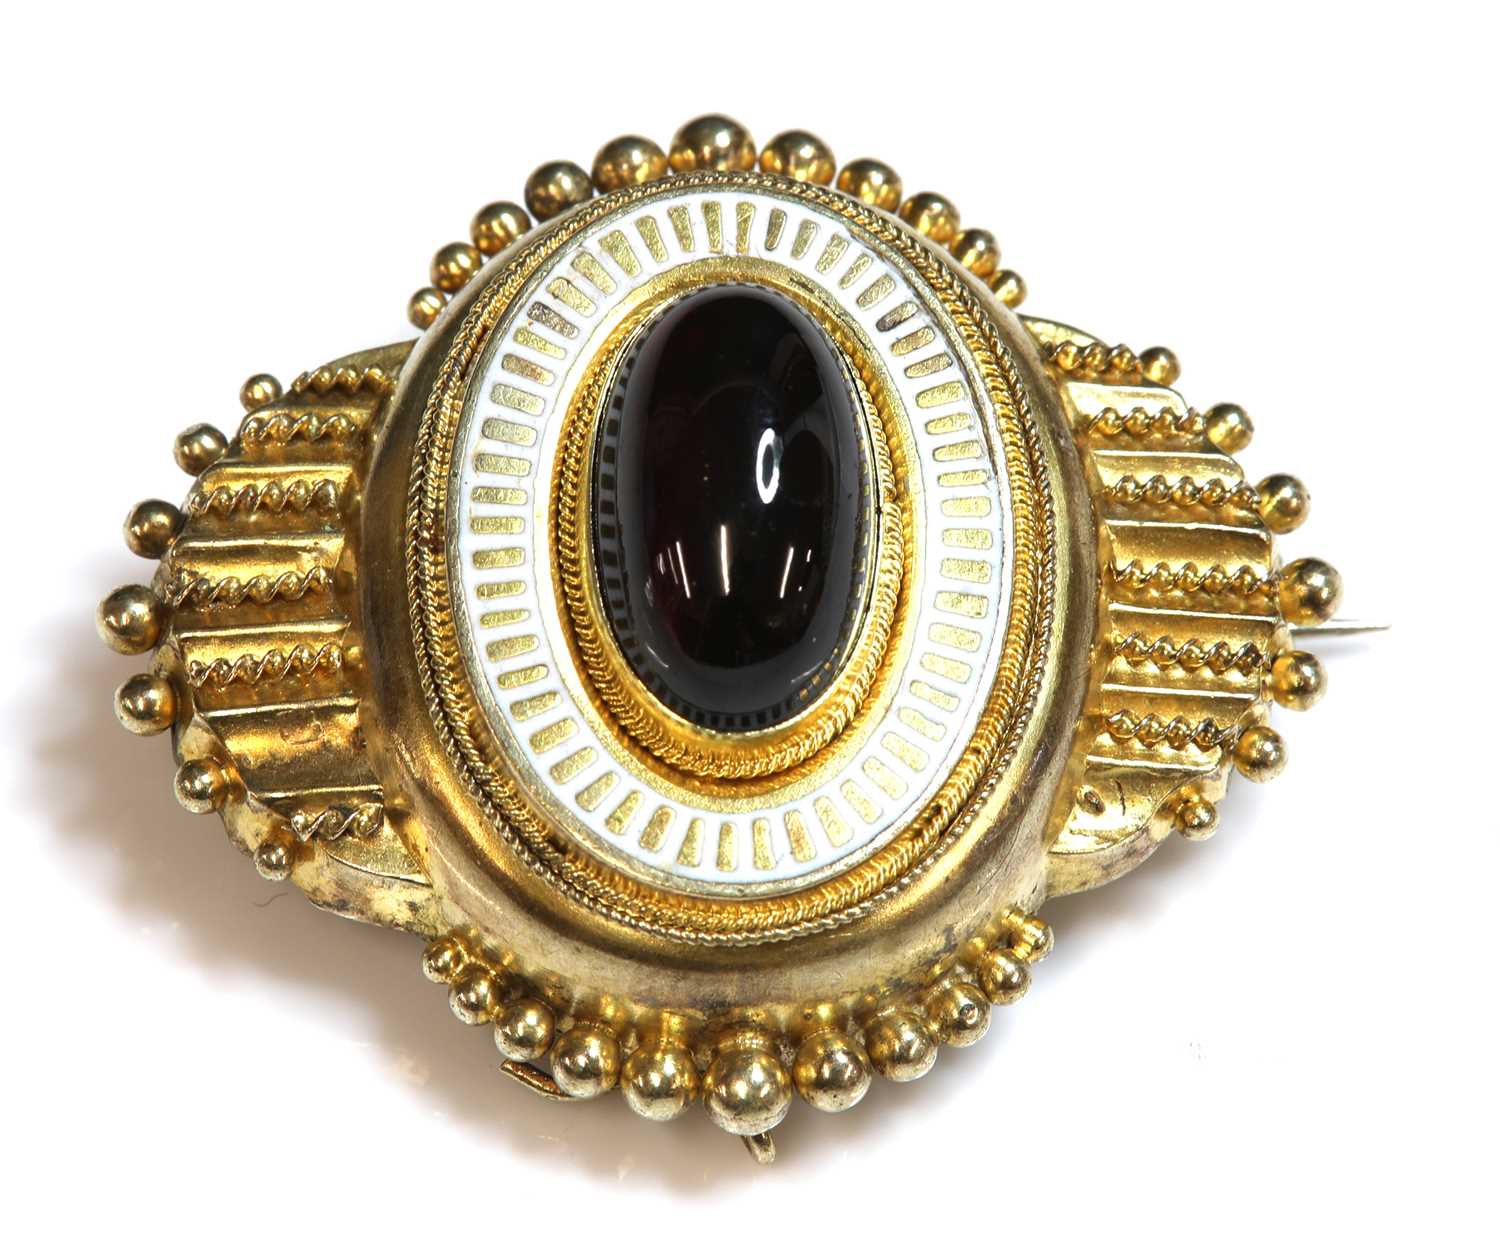 Lot 4 - A Victorian Etruscan Revival gold garnet and enamel shield form brooch, c.1860